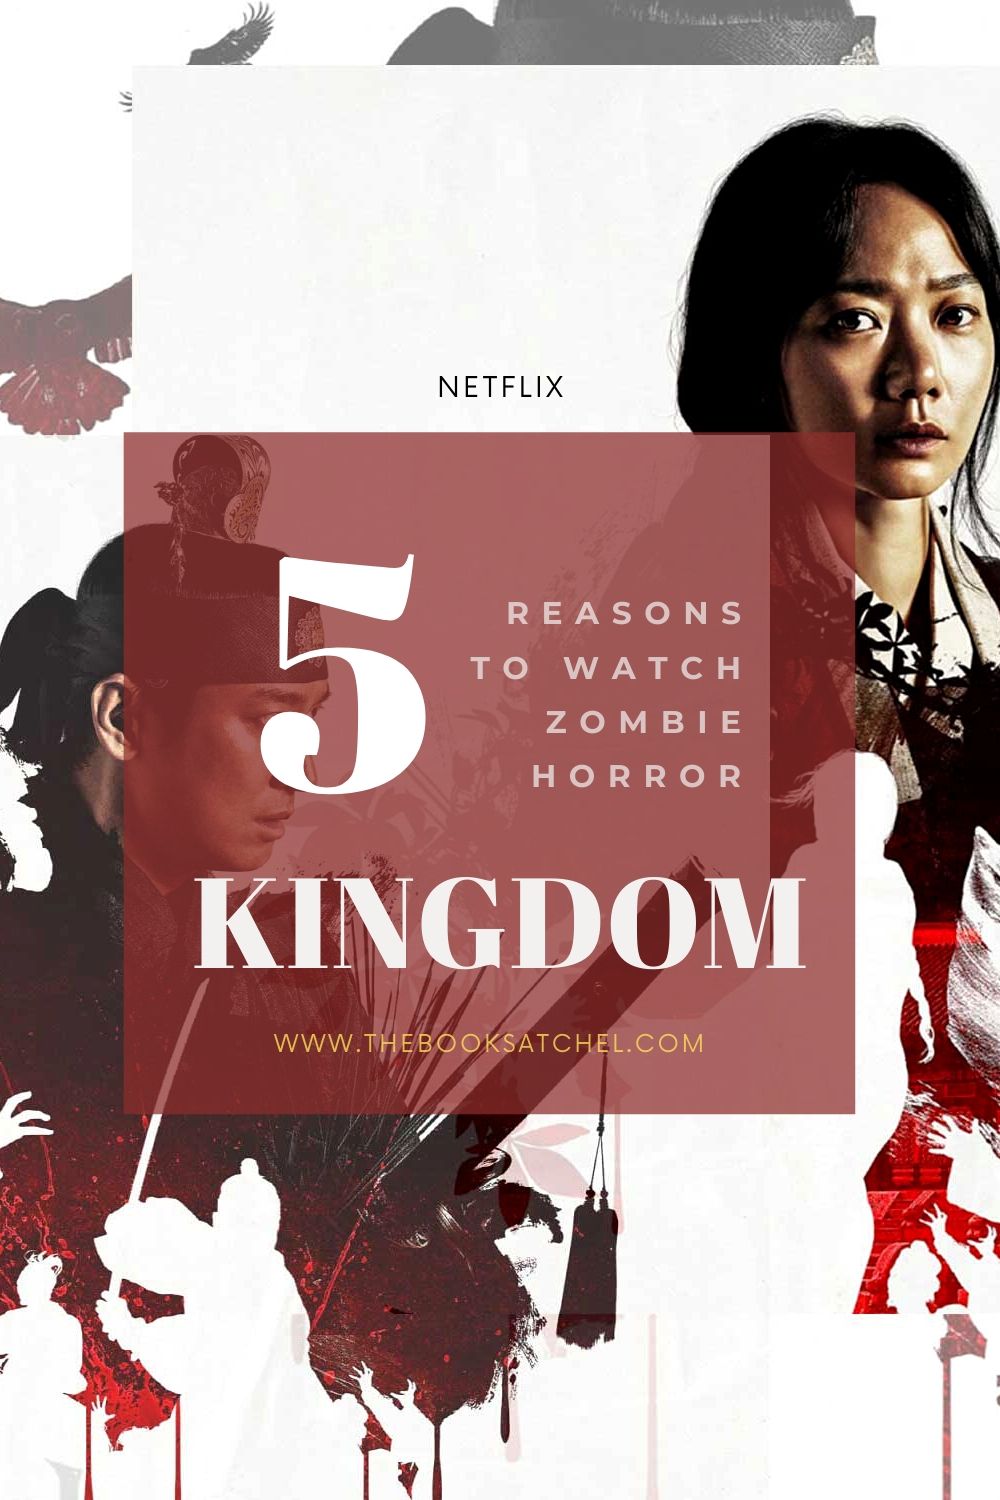 Kingdom on Netflix Is Eerily Prescient Pandemic Horror